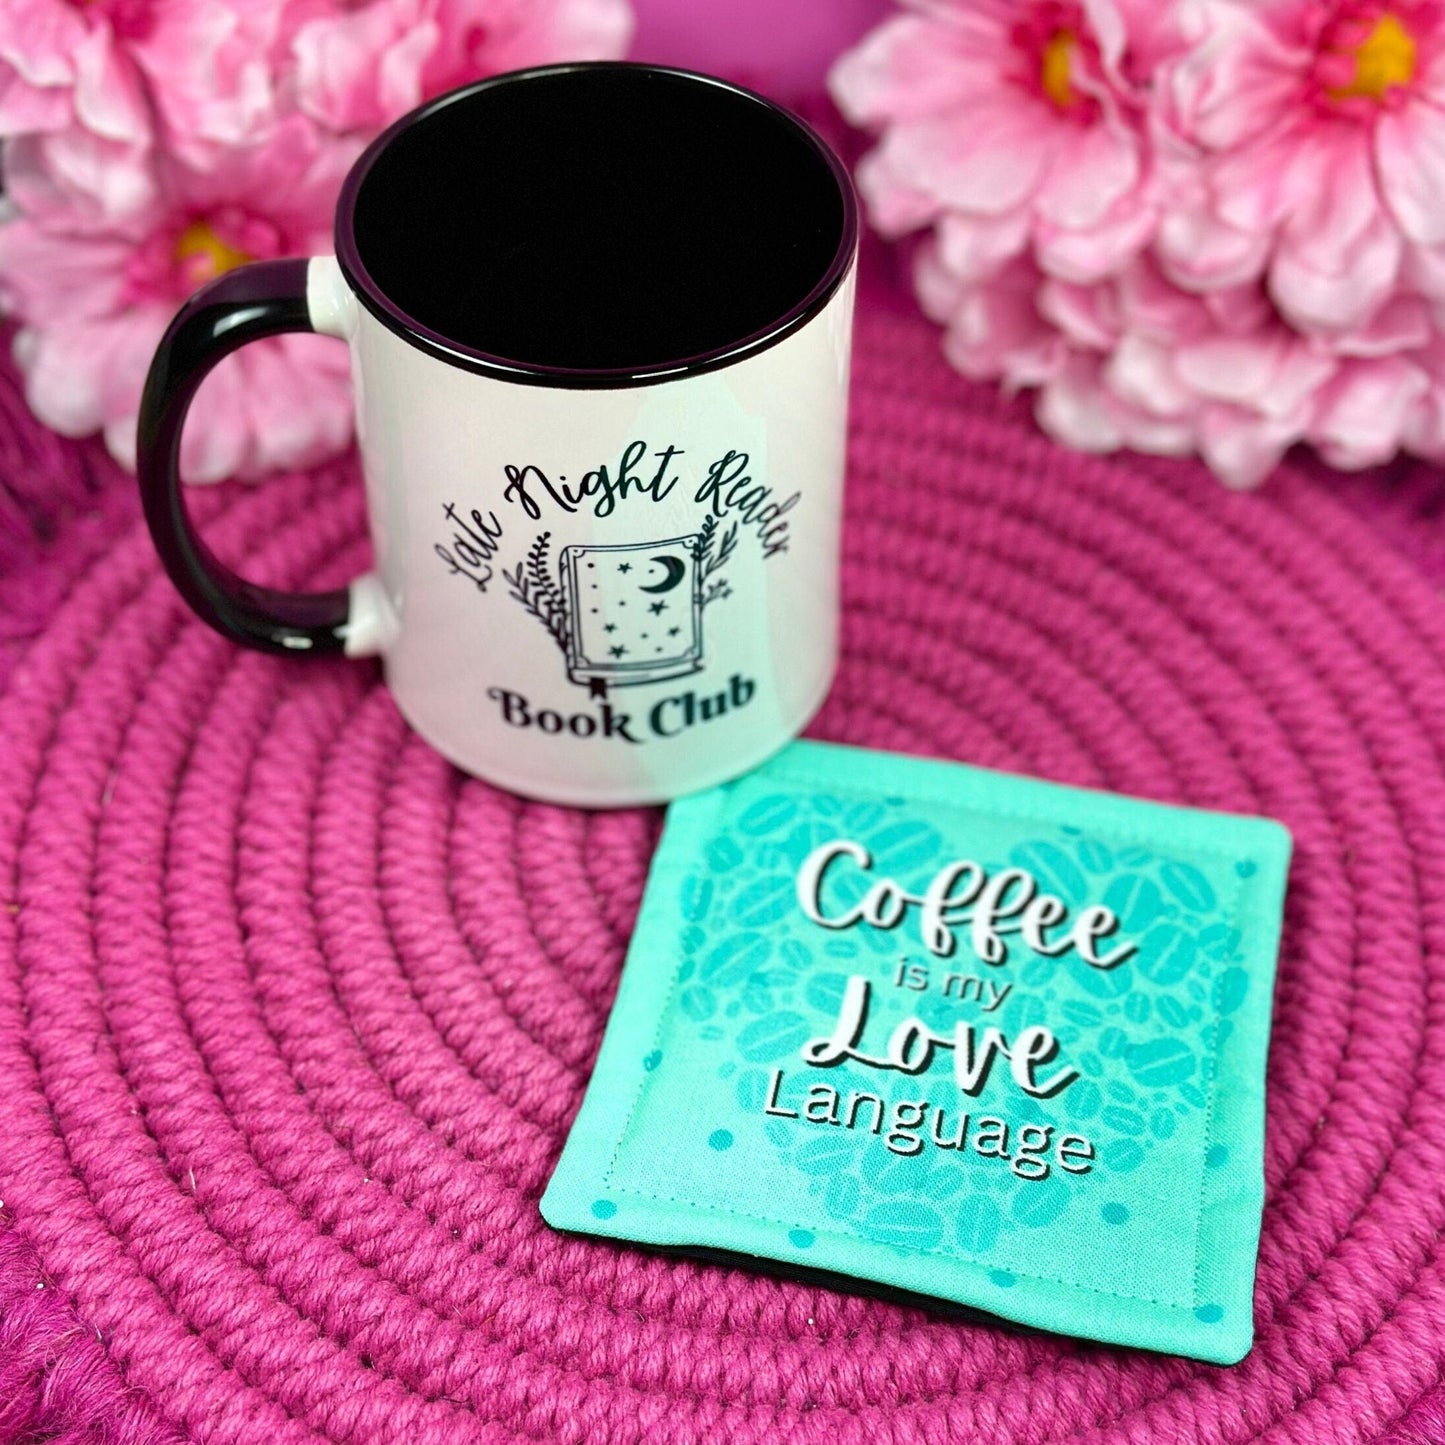 Coffee is My Love Language Mug Rug, Fabric Coaster, Teal Blue Drink Coaster, Coffee Lover Gift, Coffee Accessories,, Housewarming Gift Ideas